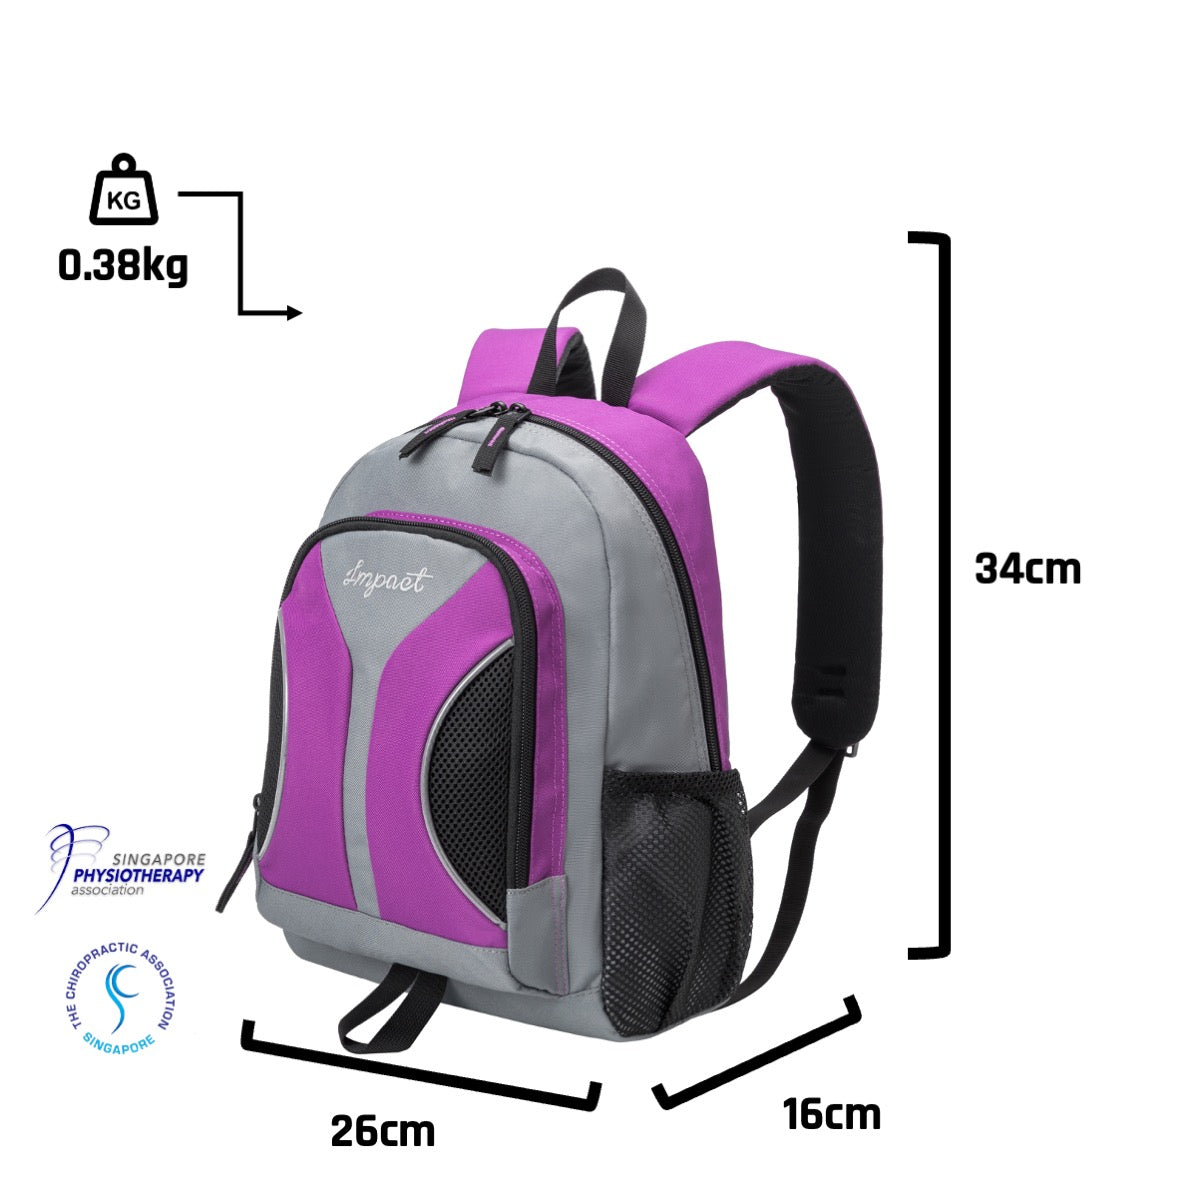 IMPACT IM-01298 Junior Backpack